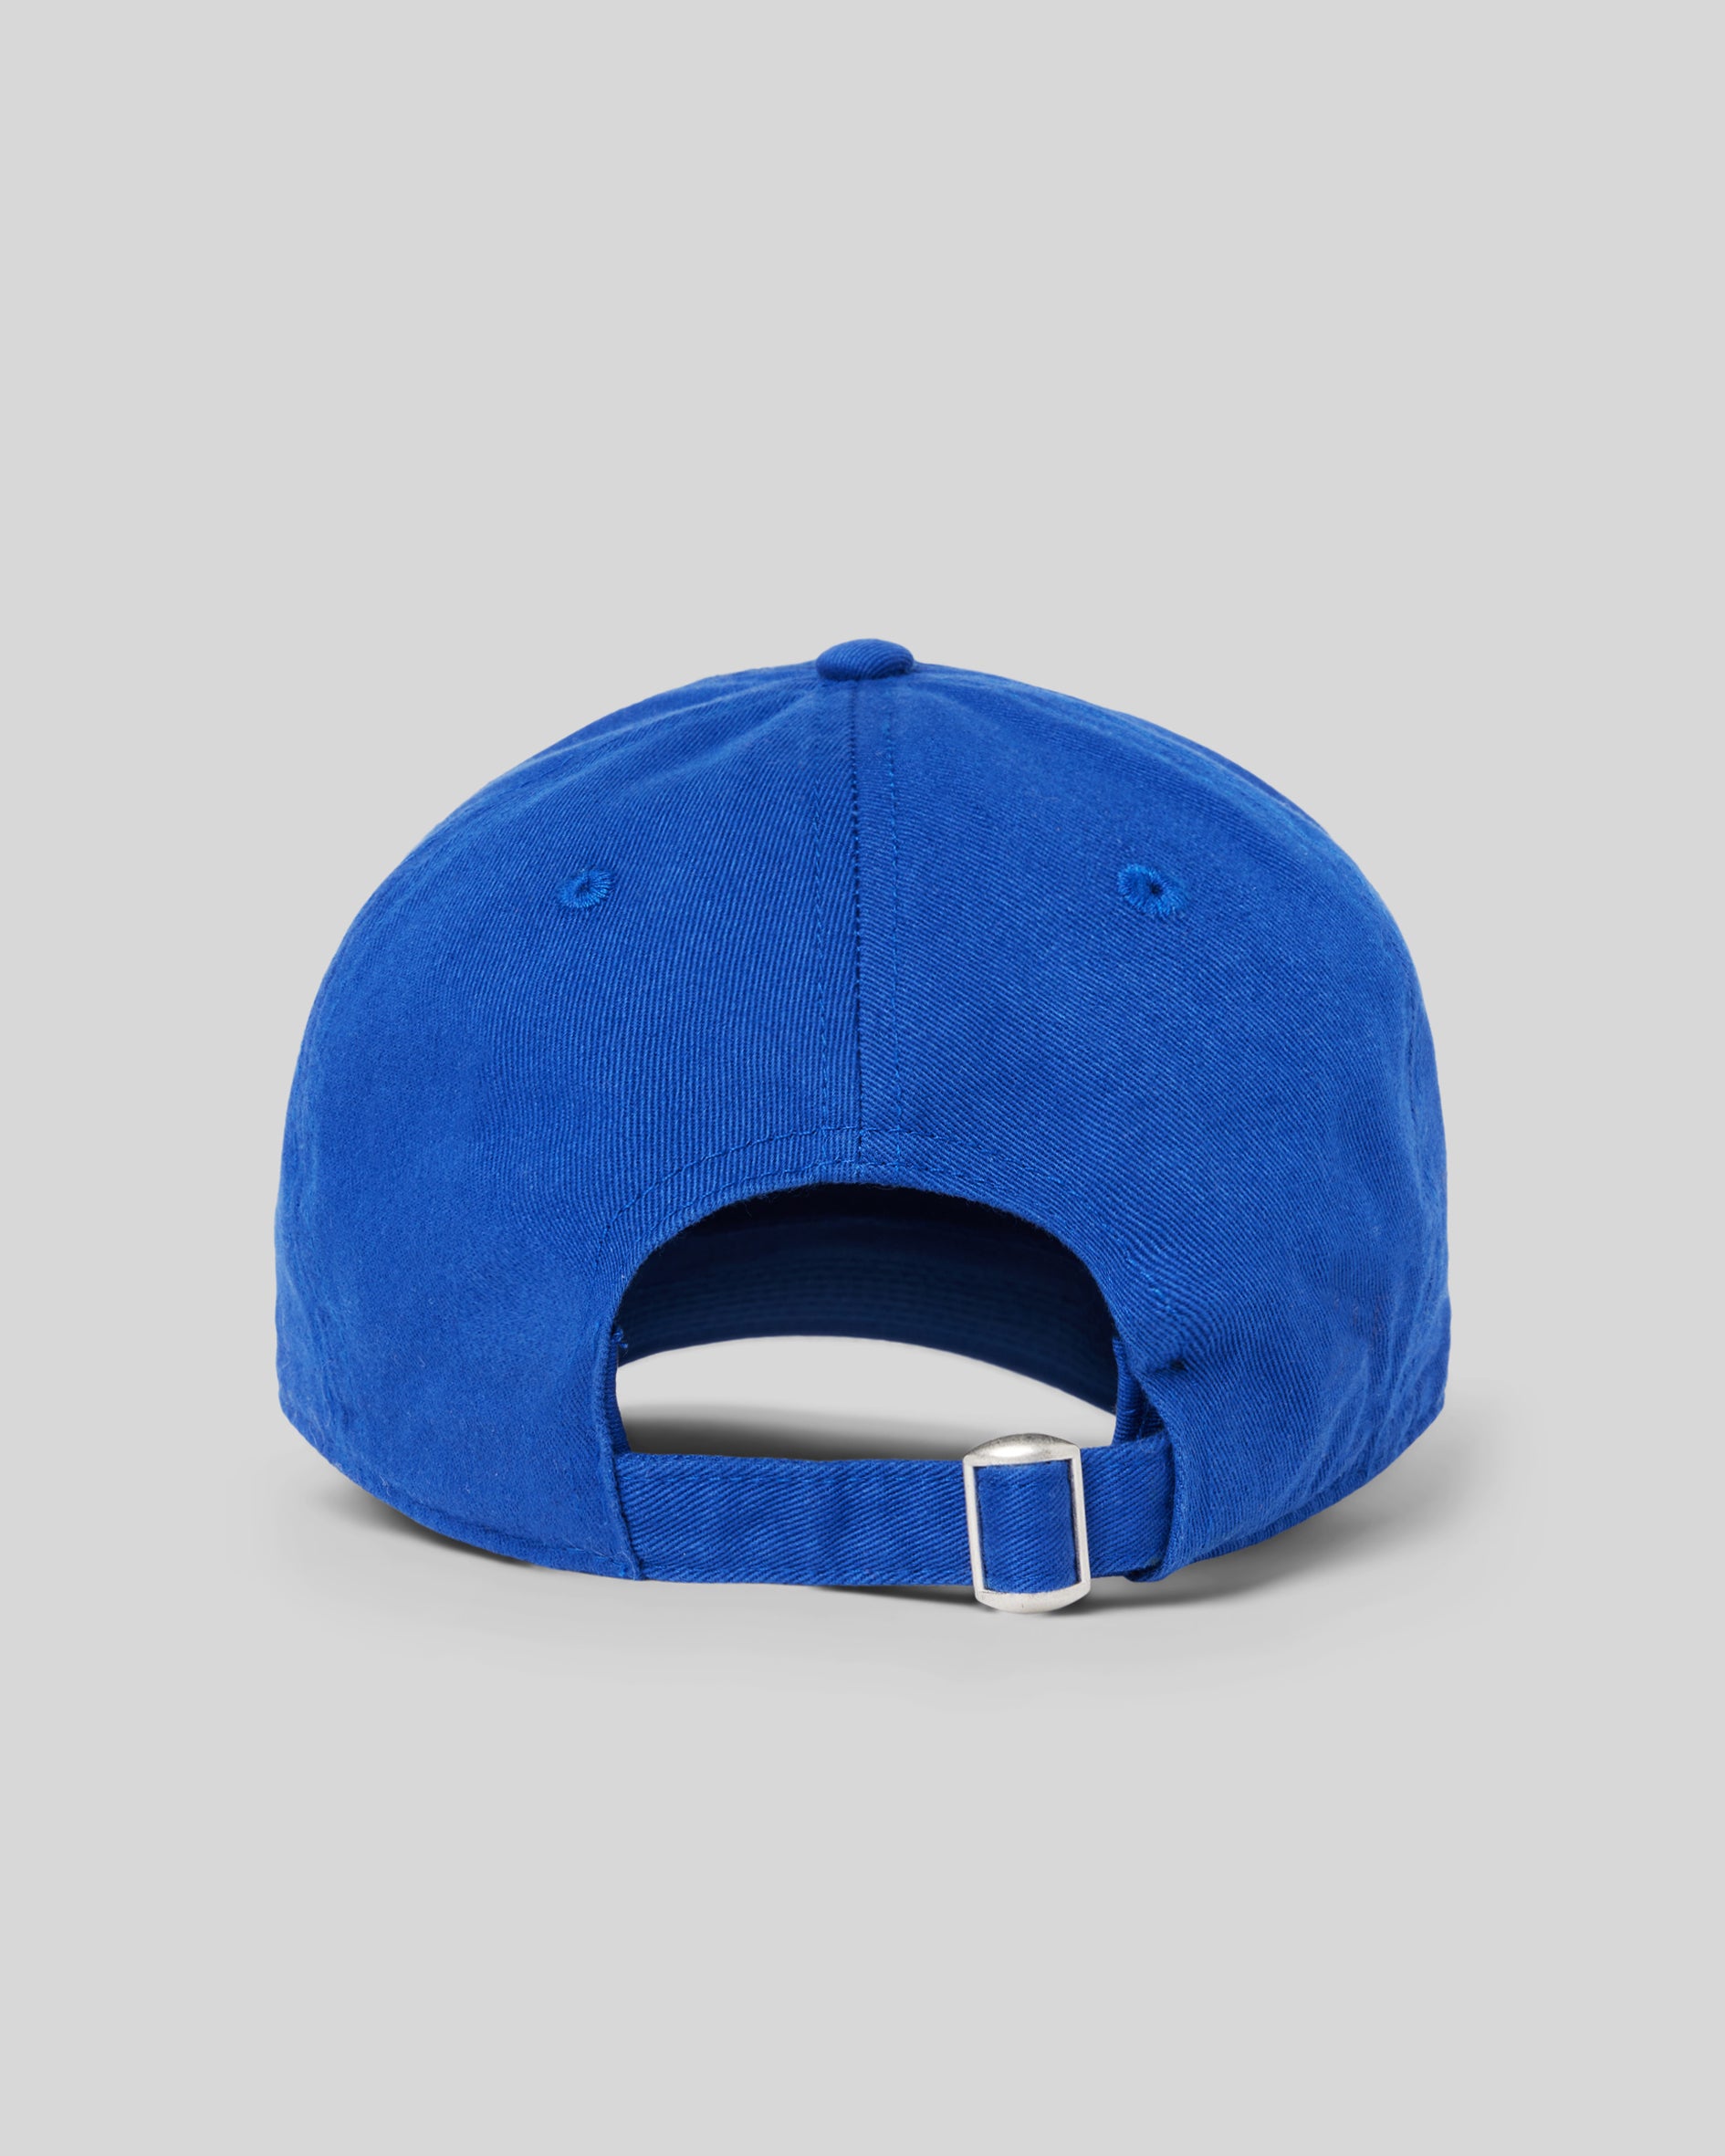 1987 Logo Hat, Cobalt Blue. Rear photograph of cobalt blue baseball hat with white Luna Luna embroidered text at front.